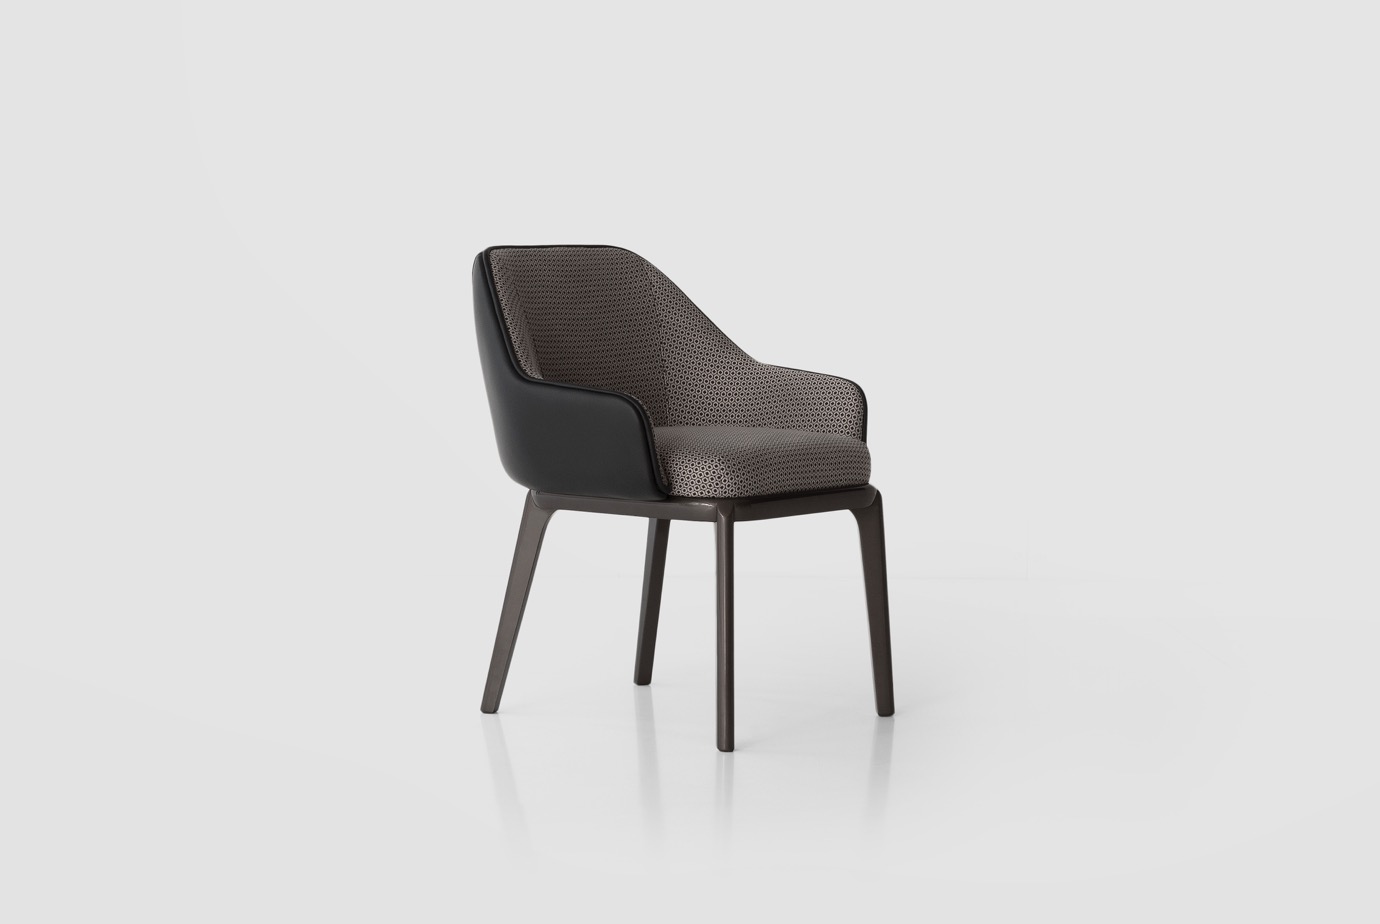 Overlap - Chair / Carlos Soriano